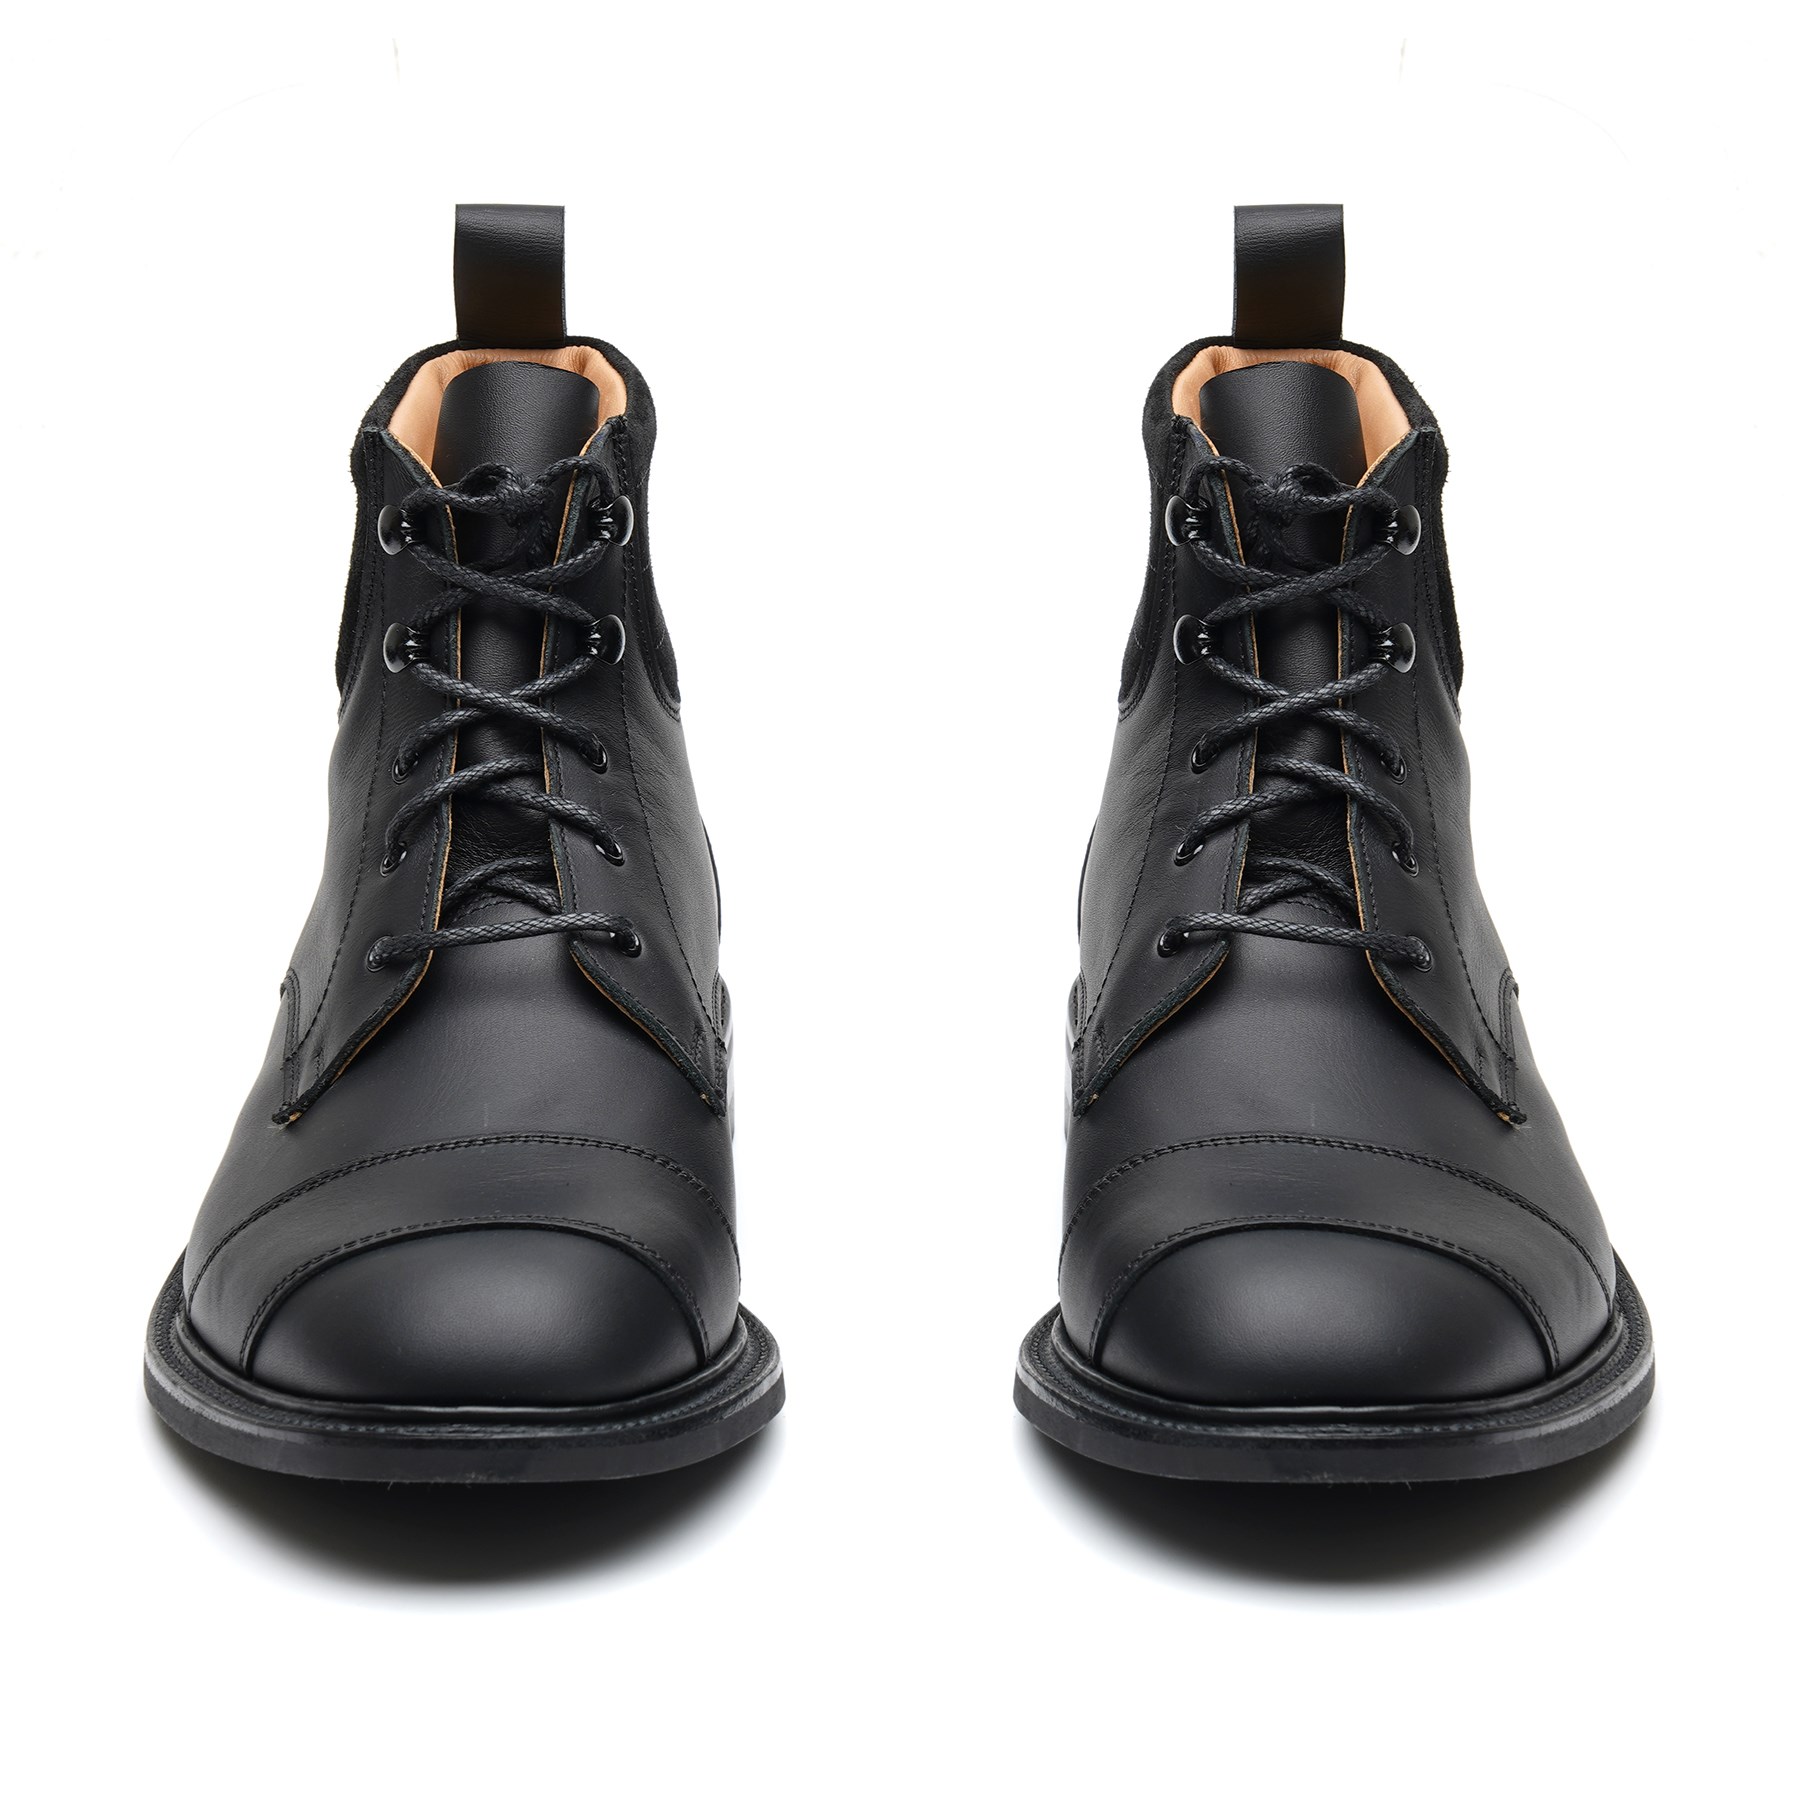 Tricker's Roadster boots in black